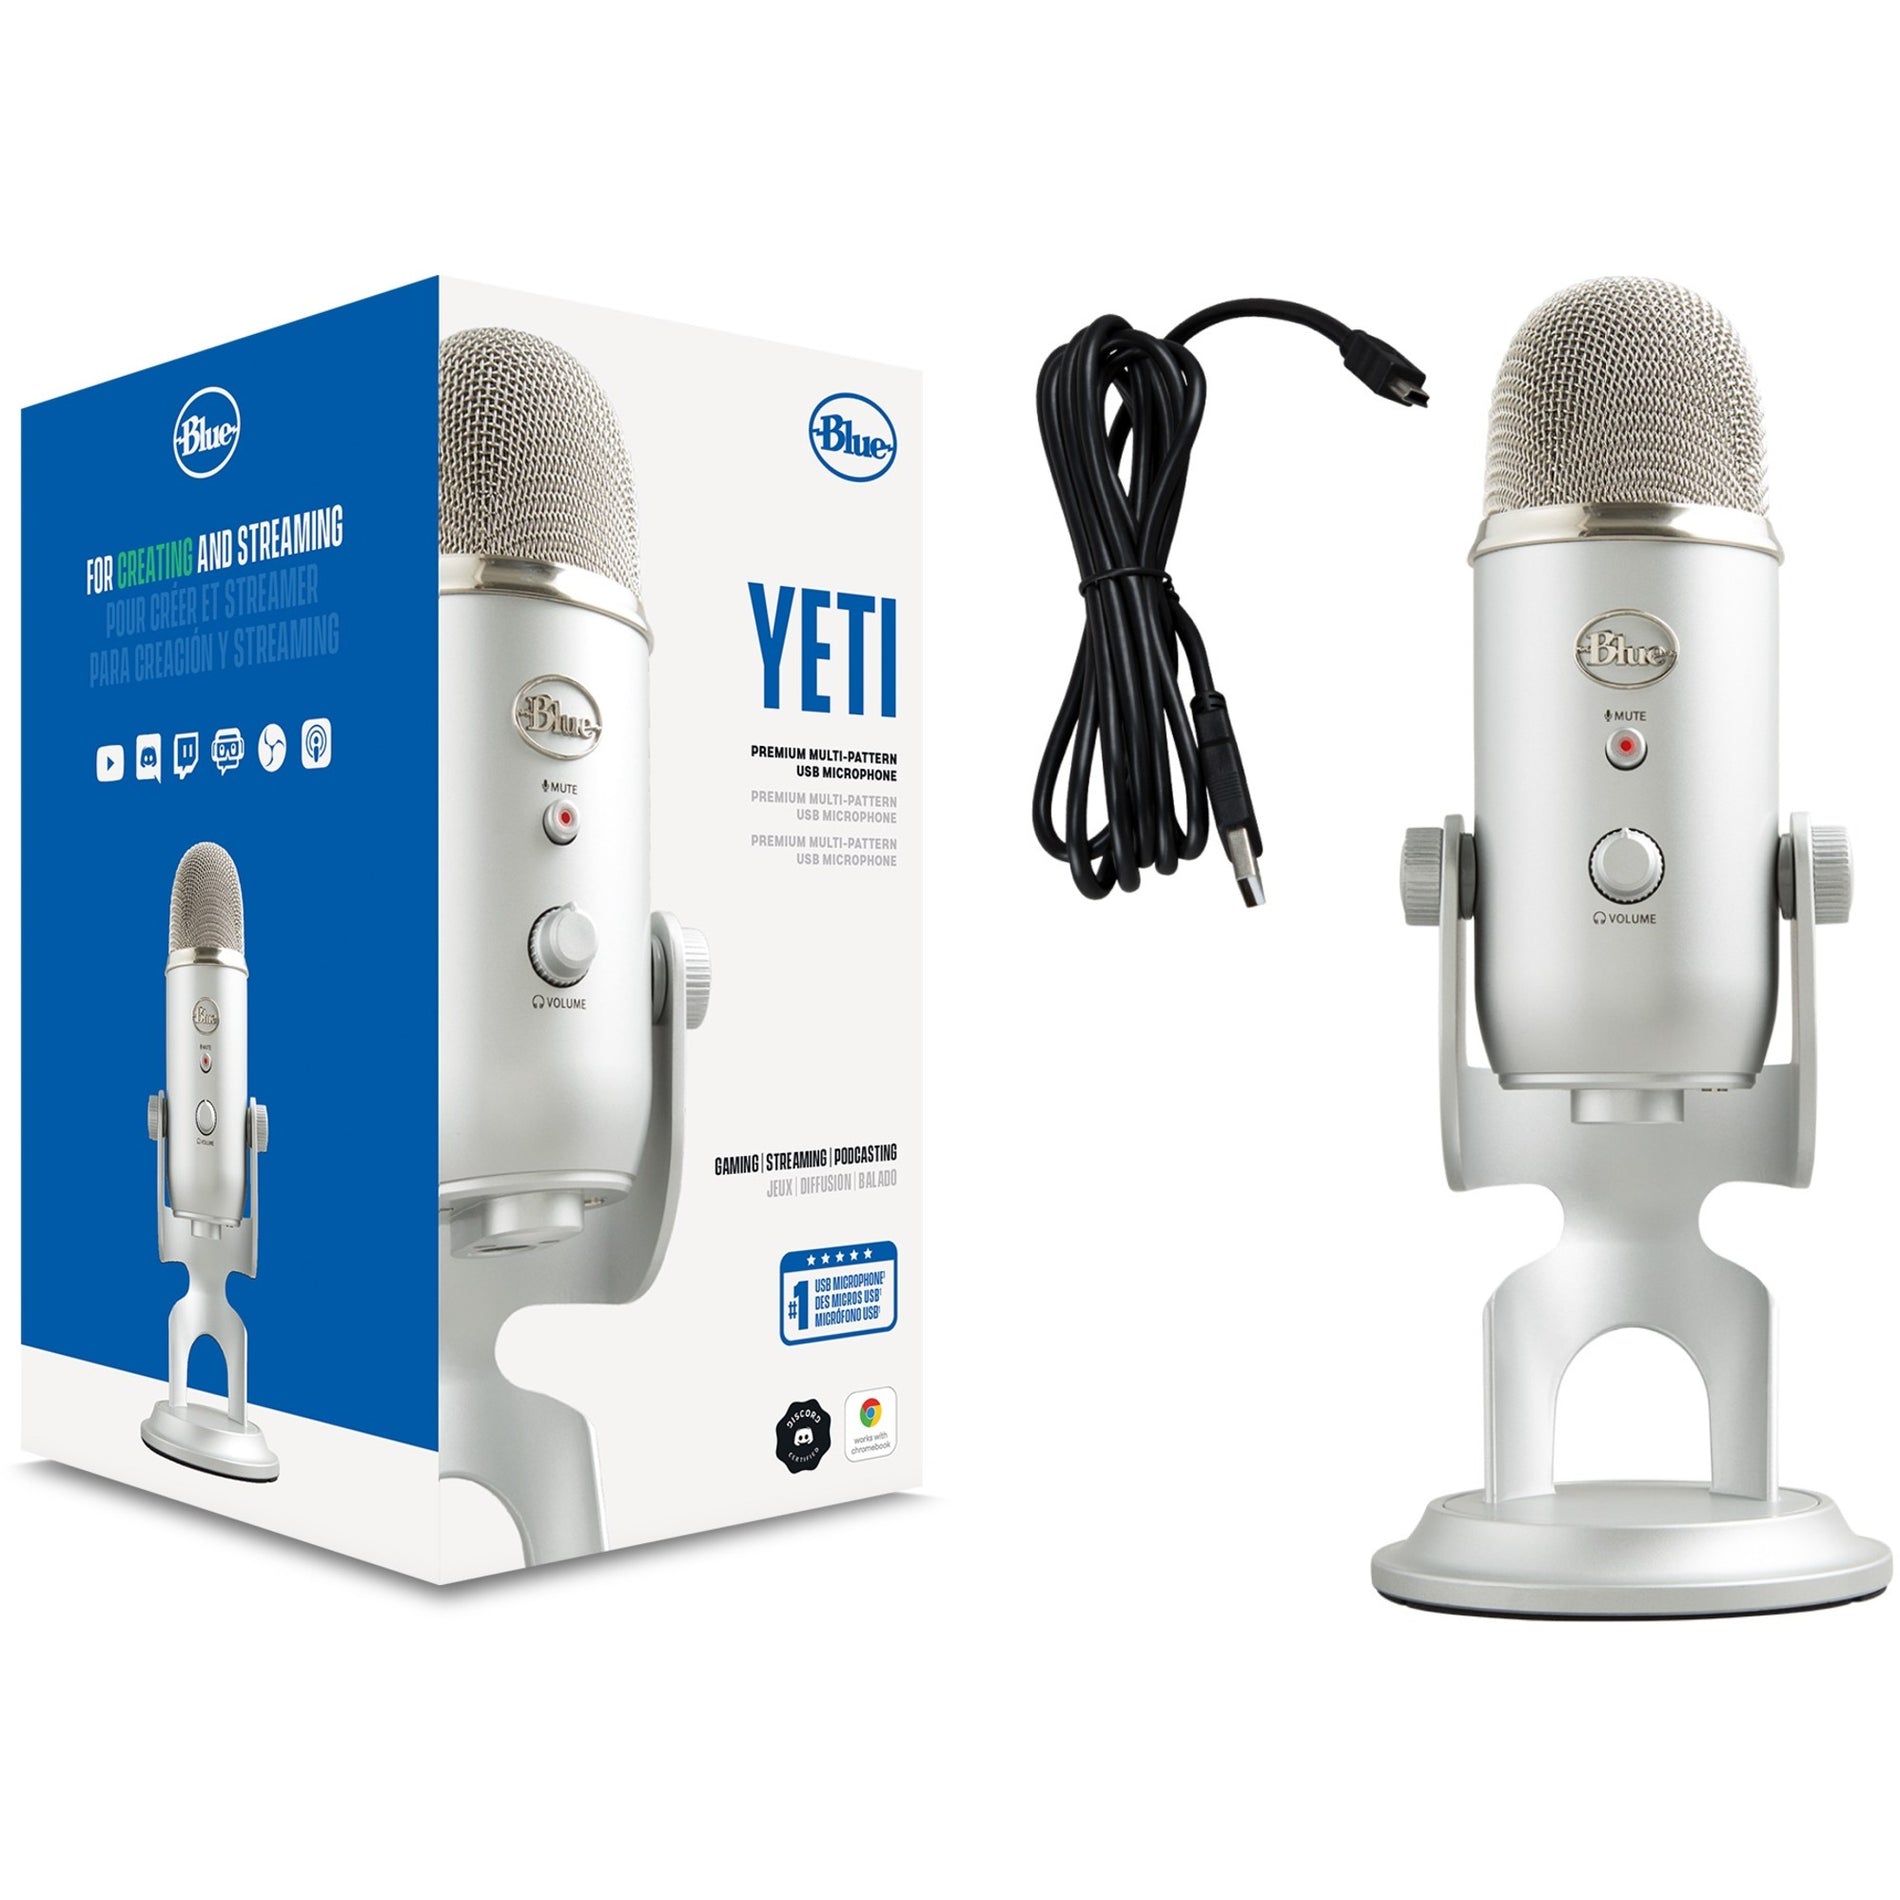 Blue 988-000103 Yeti Professional Multi-Pattern USB Mic for Recording & Streaming, 2 Year Warranty, Bi-directional, Cardioid, Omni-directional, Condenser